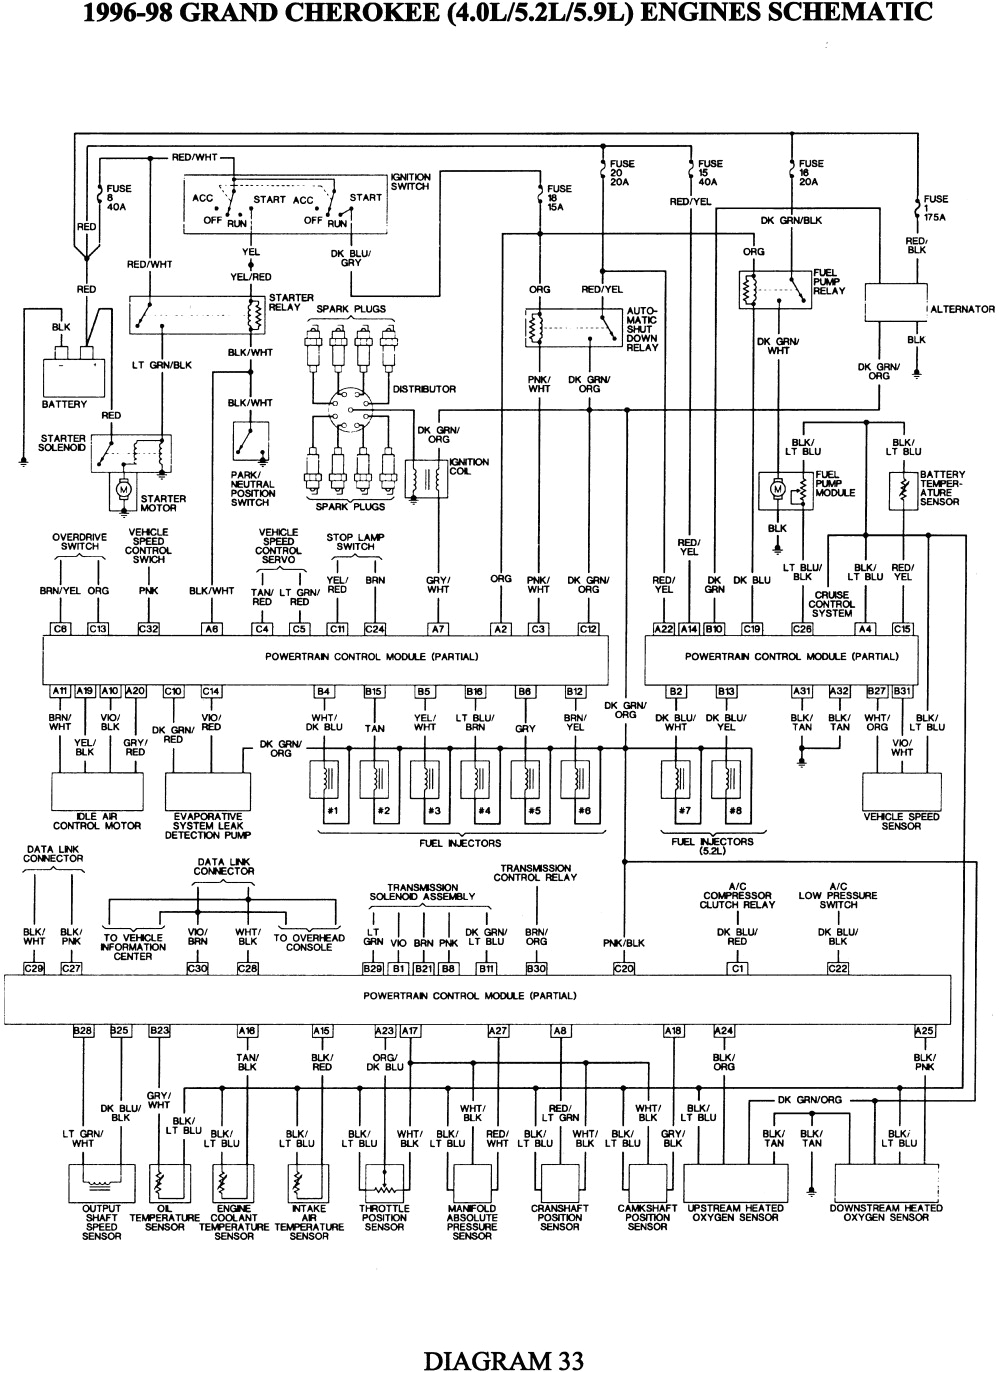 wiring diagram 96 jeep xj wiring diagram schematic jeep cherokee xj wiring diagram jeep xj wiring diagram